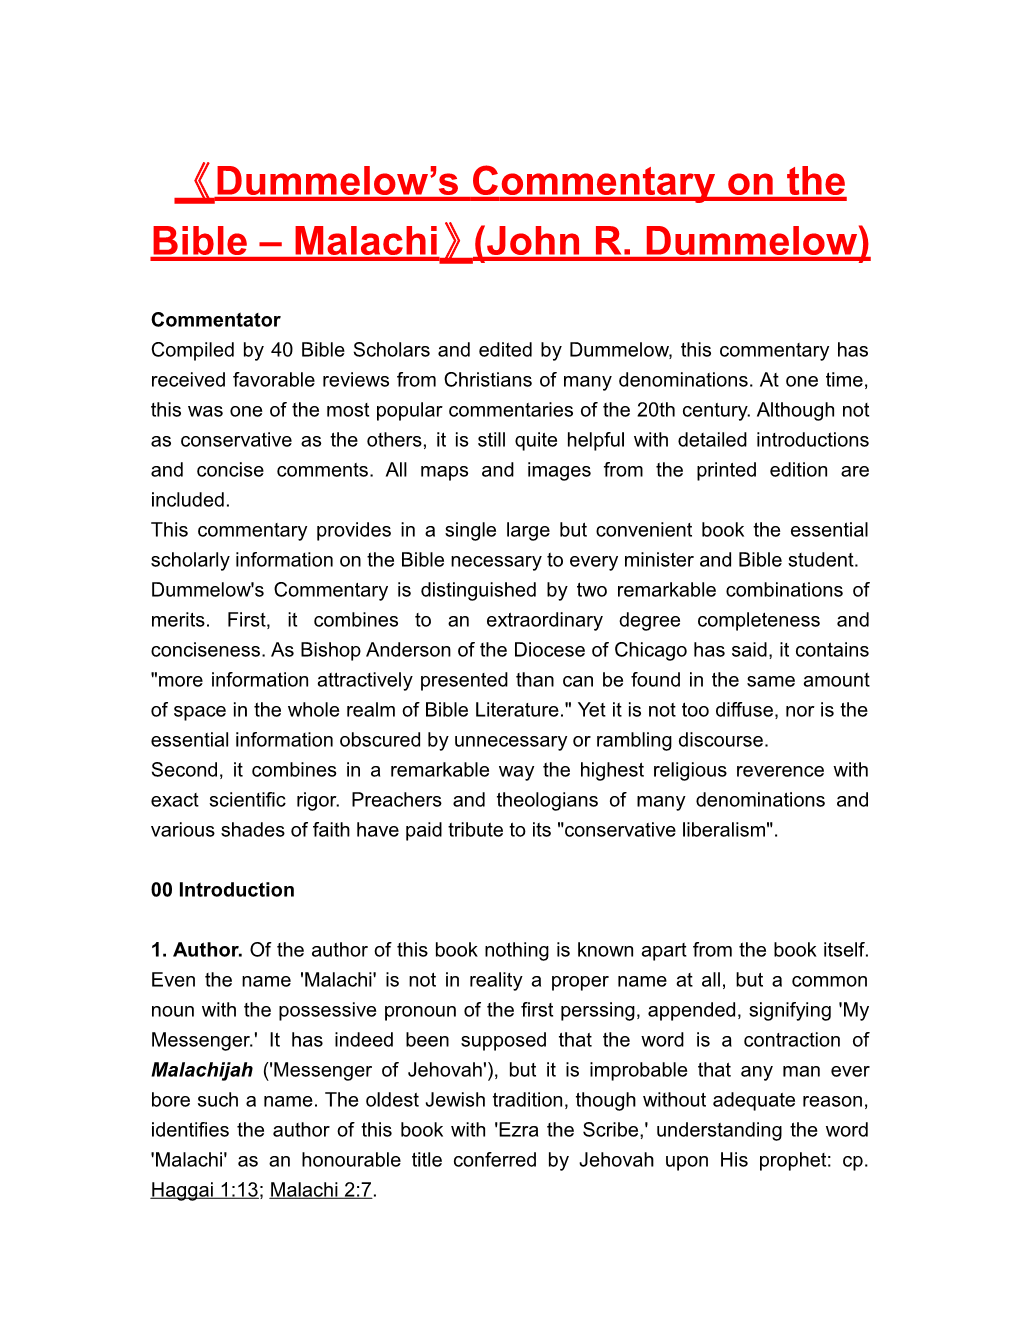 Dummelow Scommentaryon the Bible Malachi (John R. Dummelow)